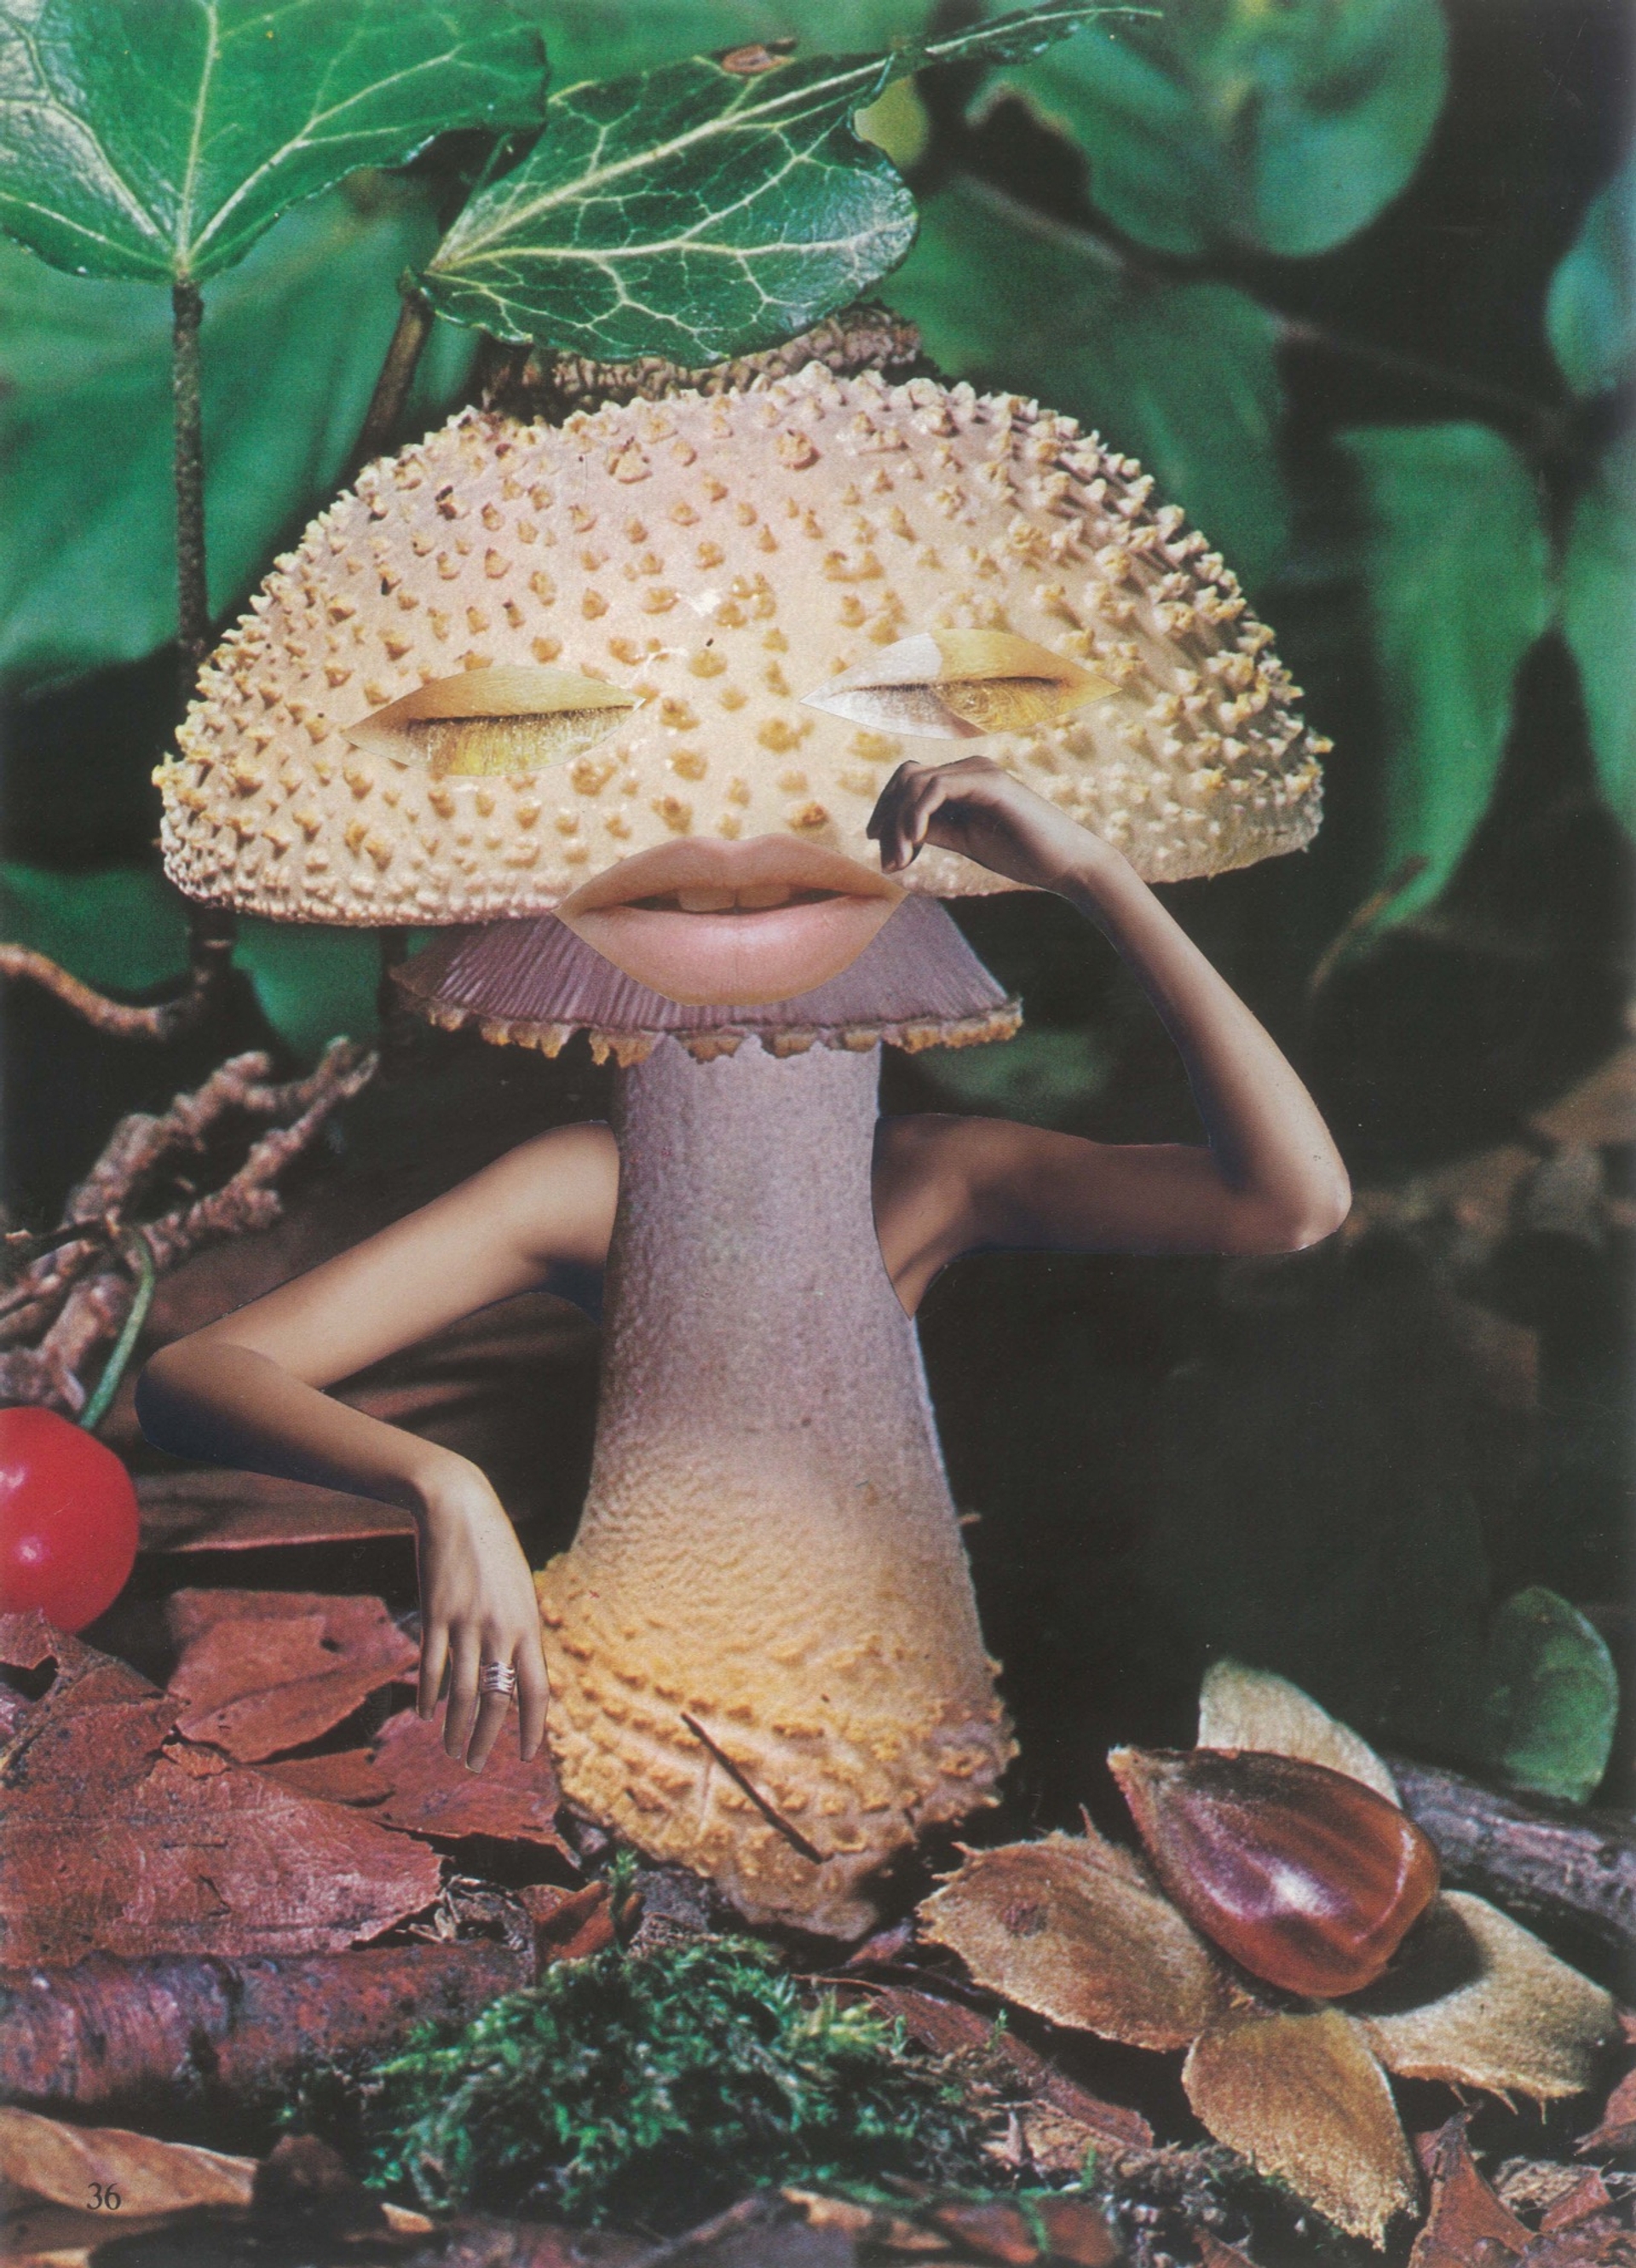 Seana Gavin, "Mindful Mushroom." From